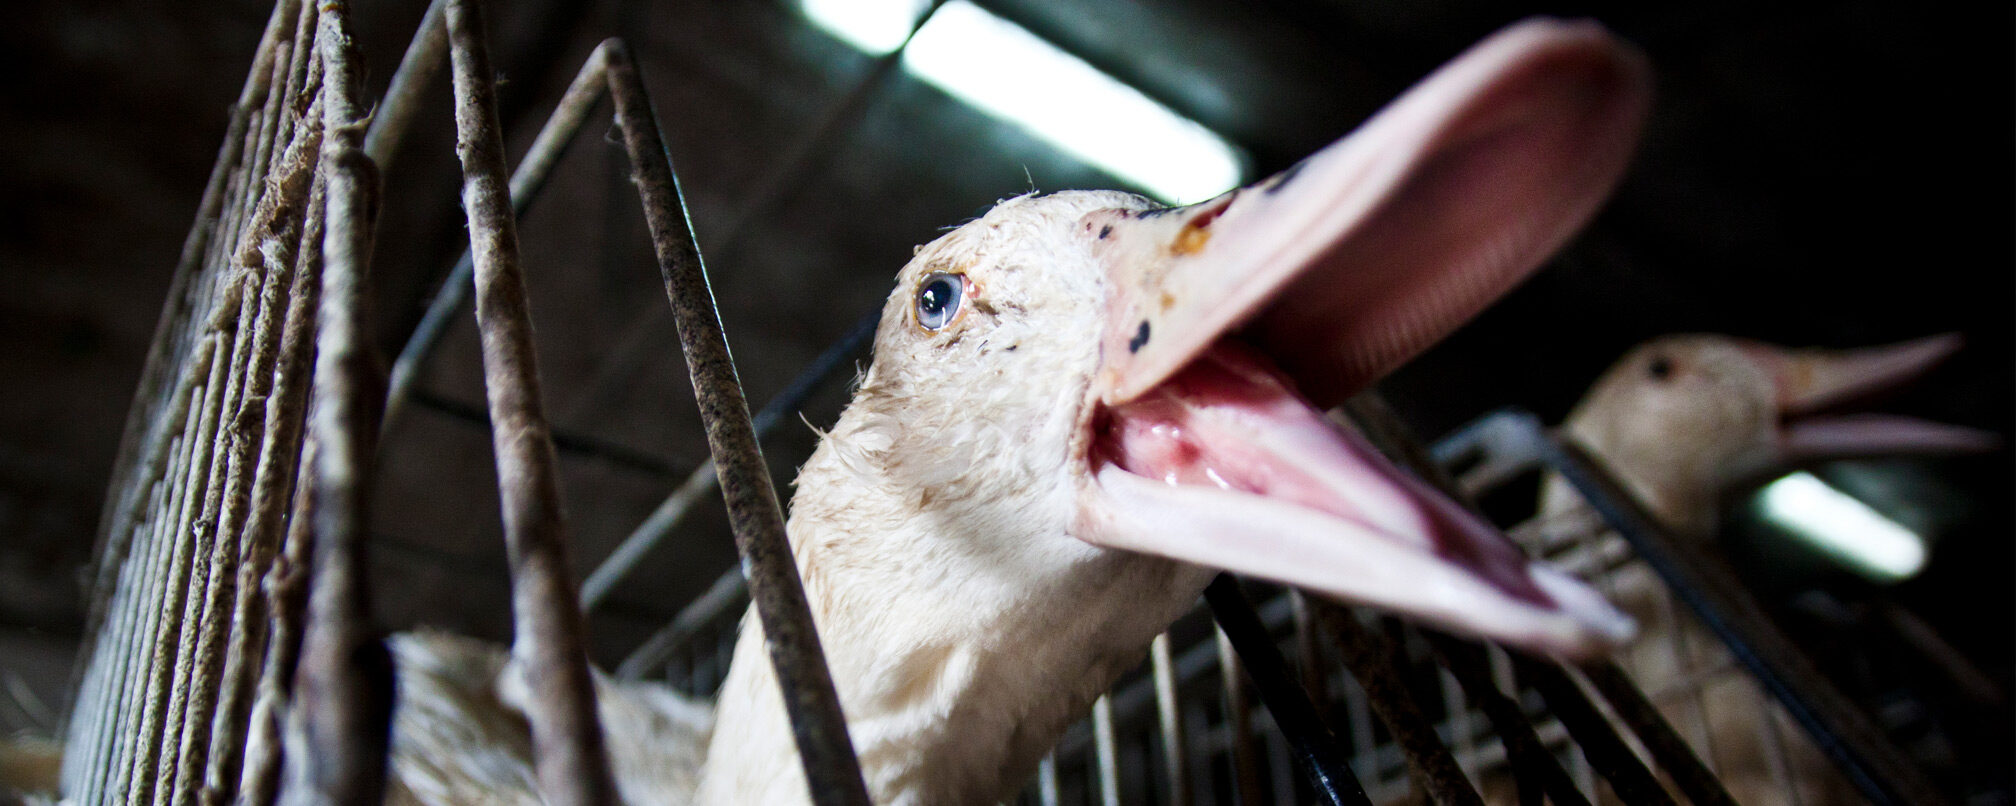 duck caged in foie gras factory farm